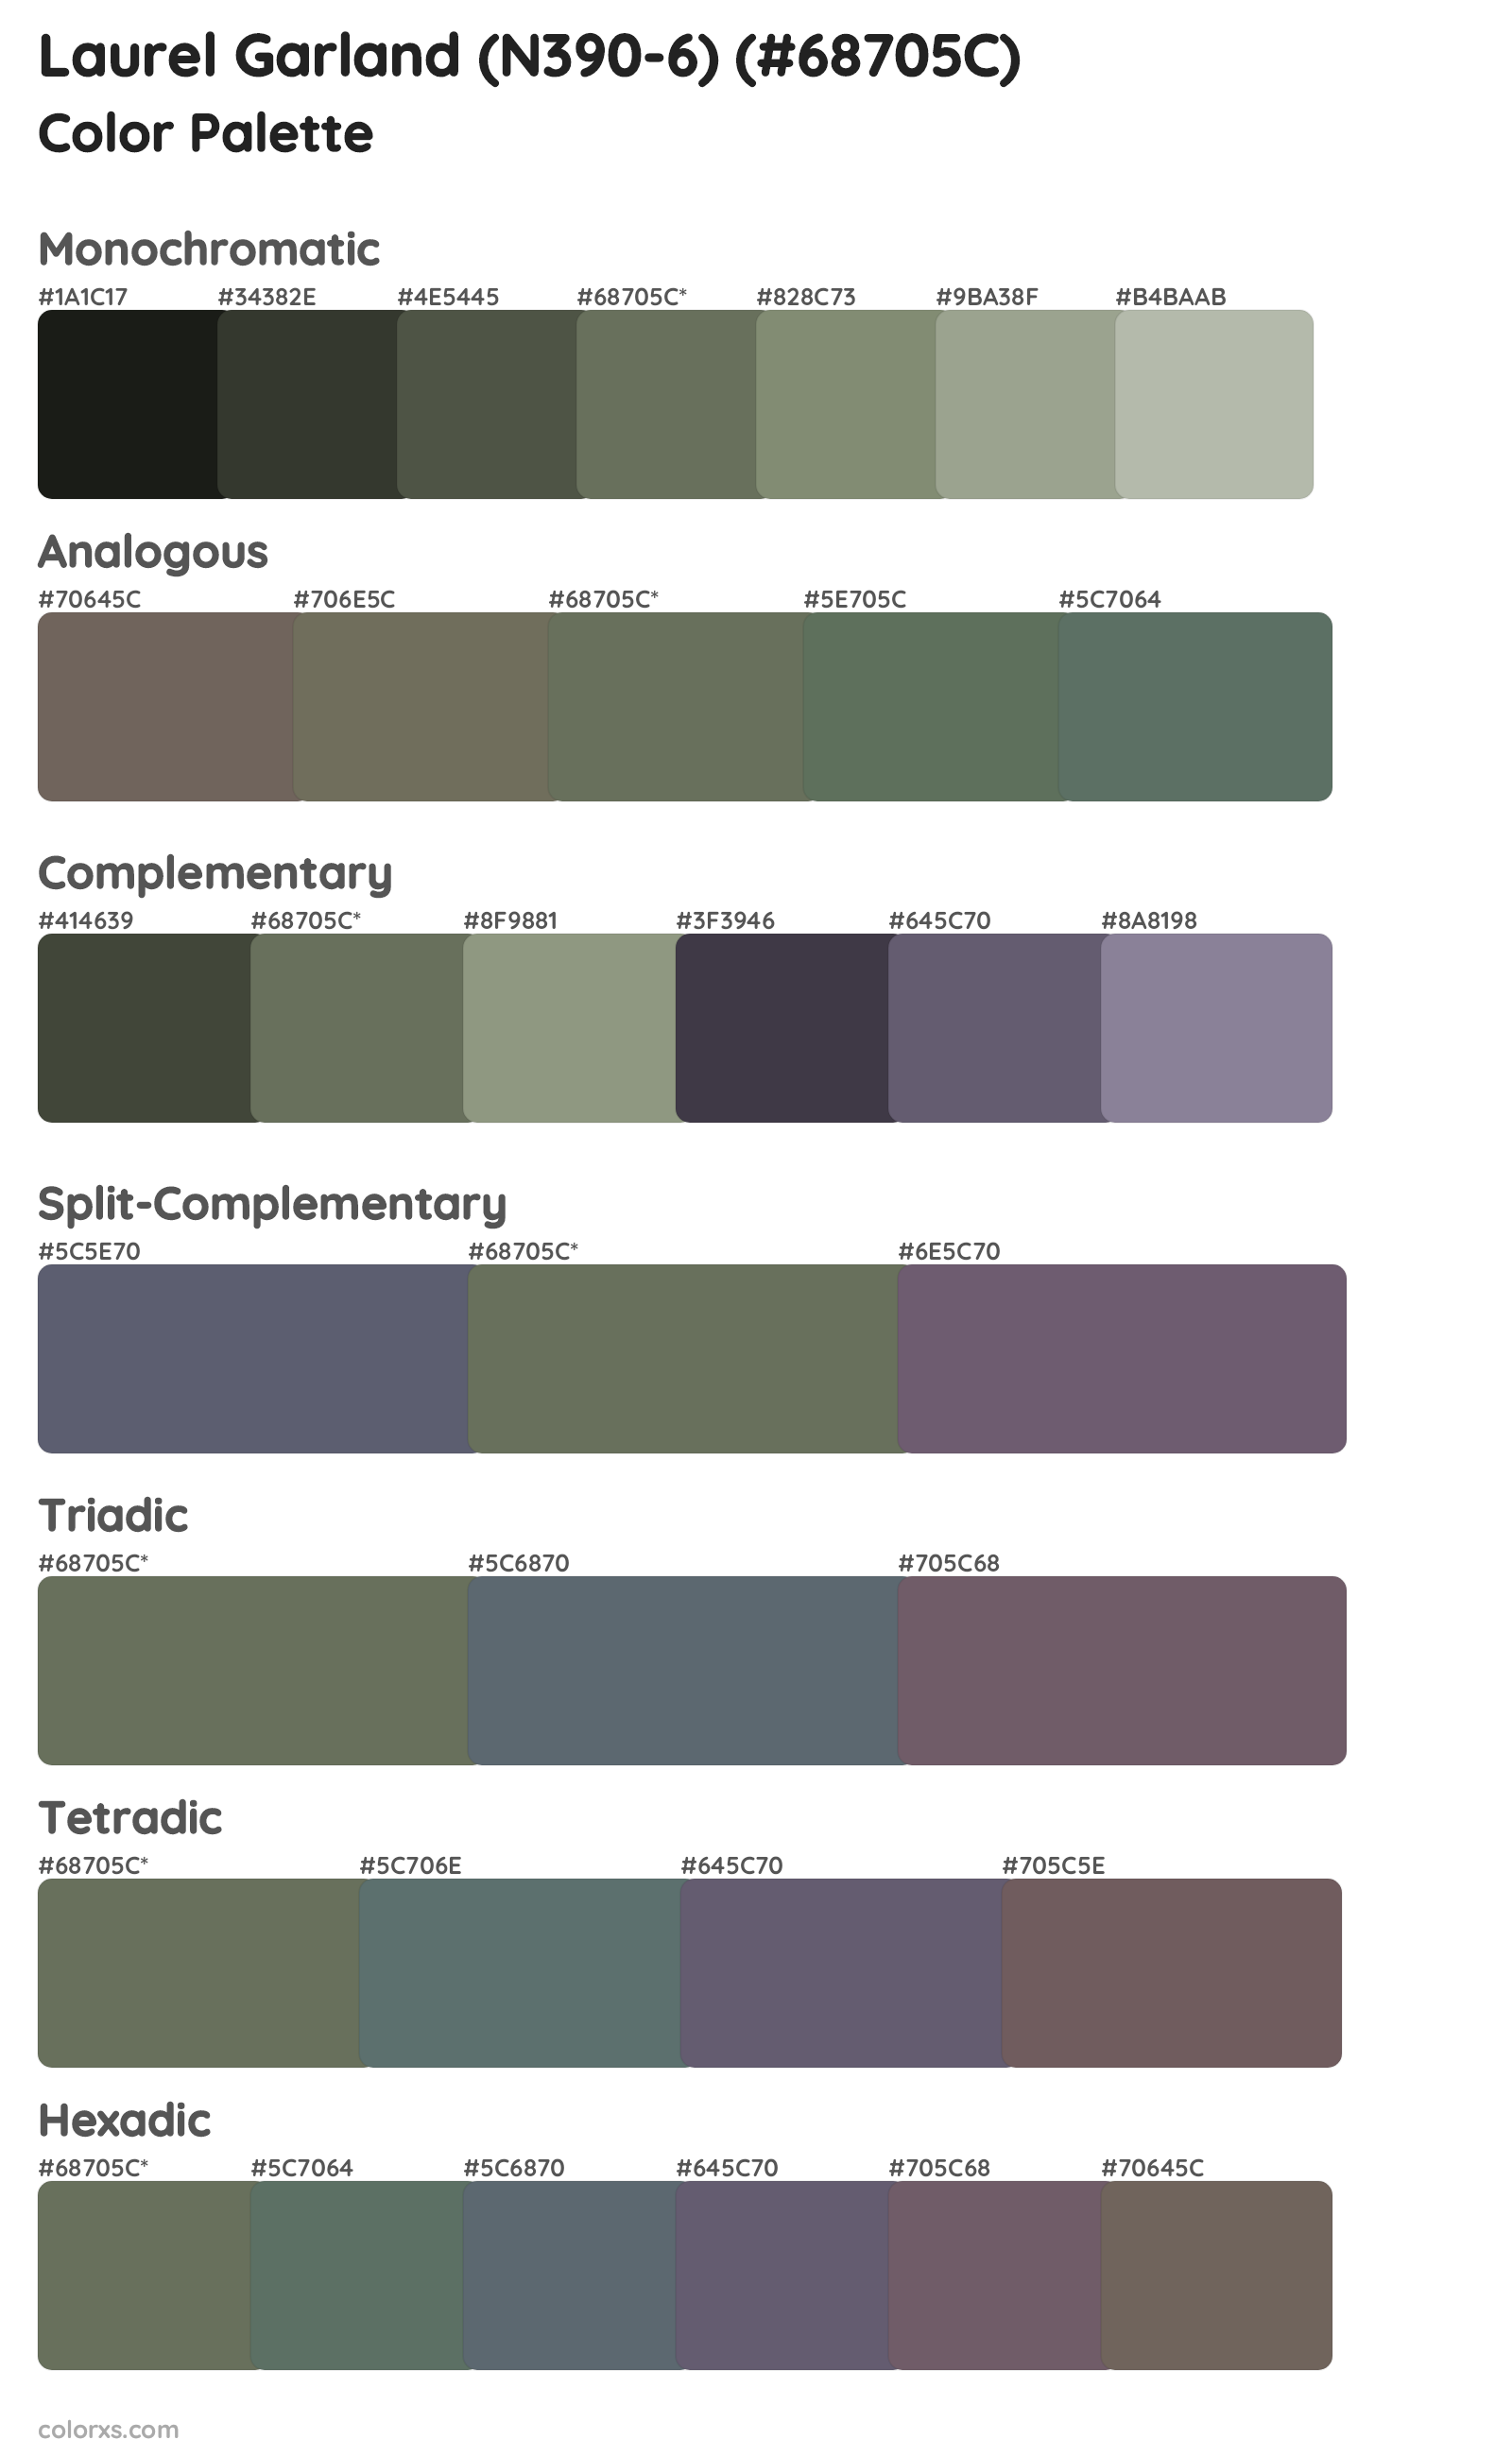 Laurel Garland (N390-6) Color Scheme Palettes